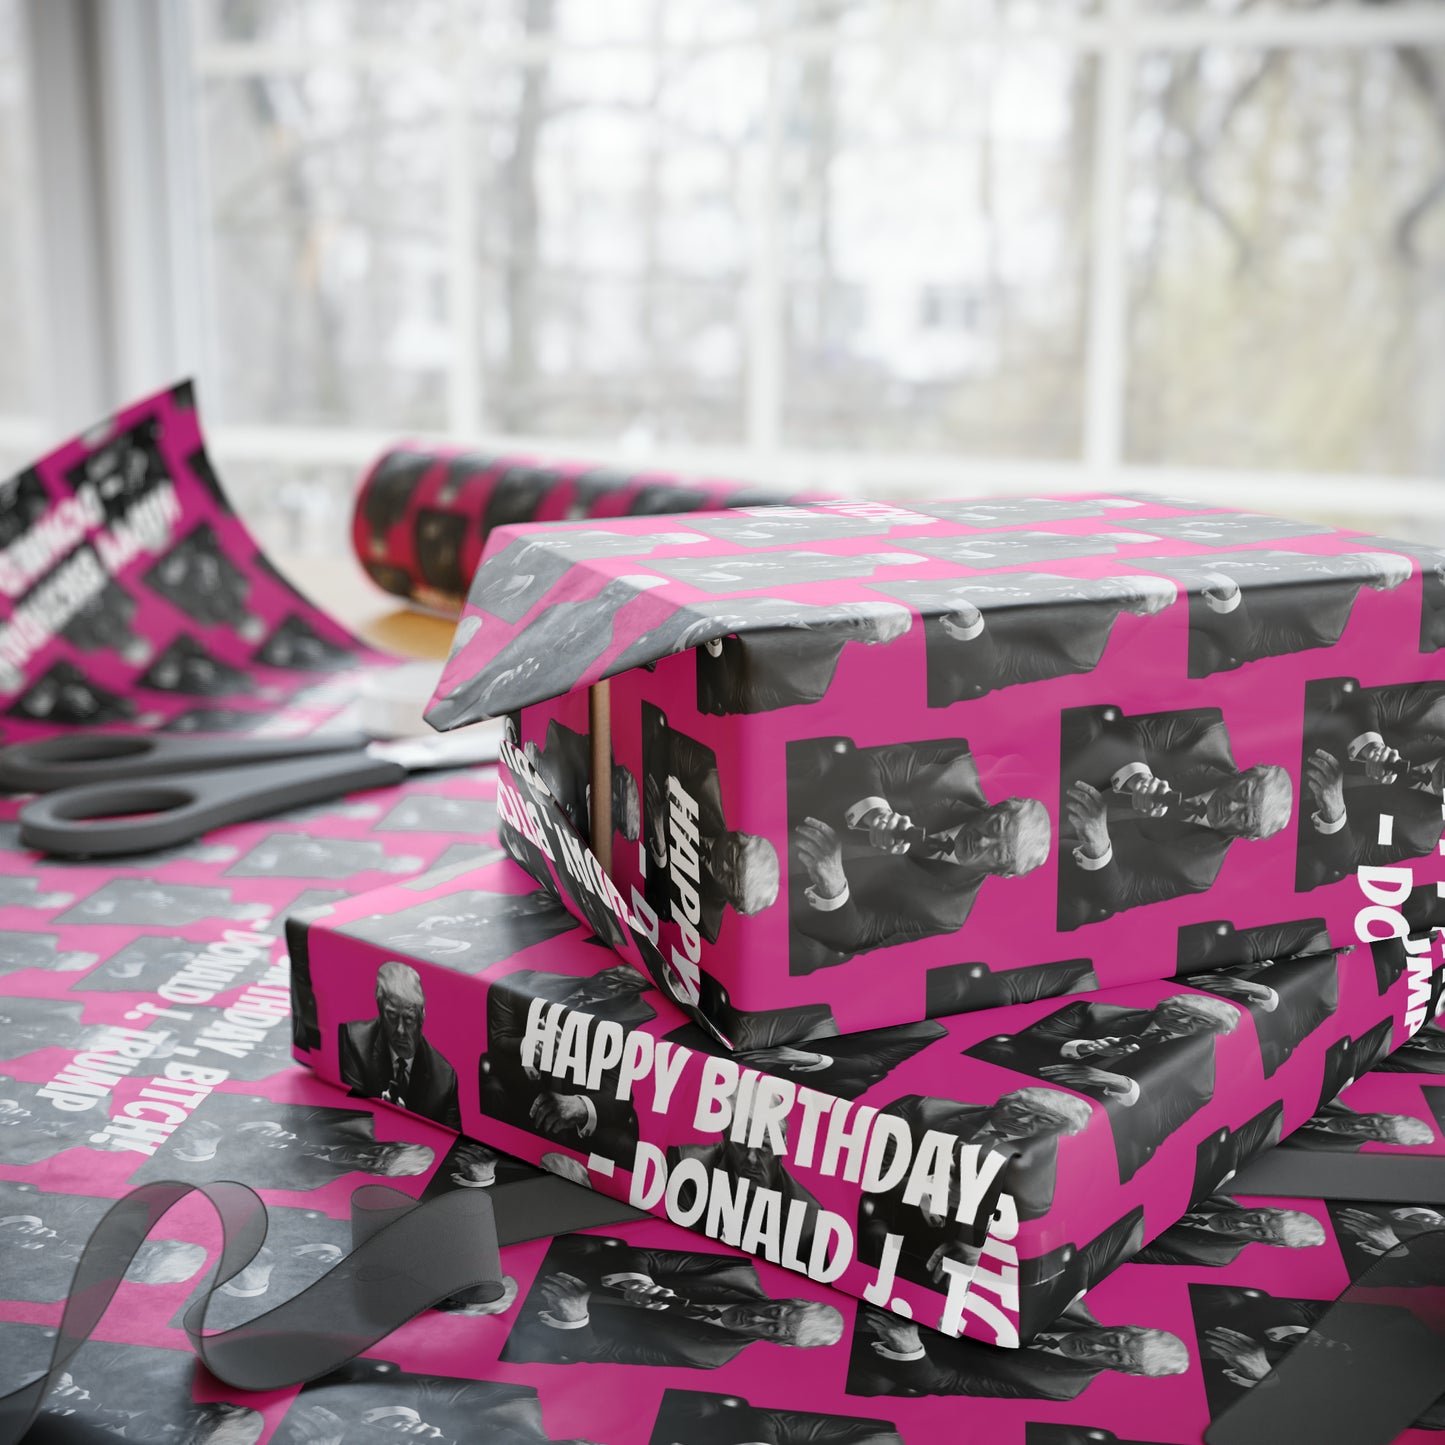 Happy Birthday Bitch! -Donald J. Trump Birthday Gift Wrapping Paper - Pink